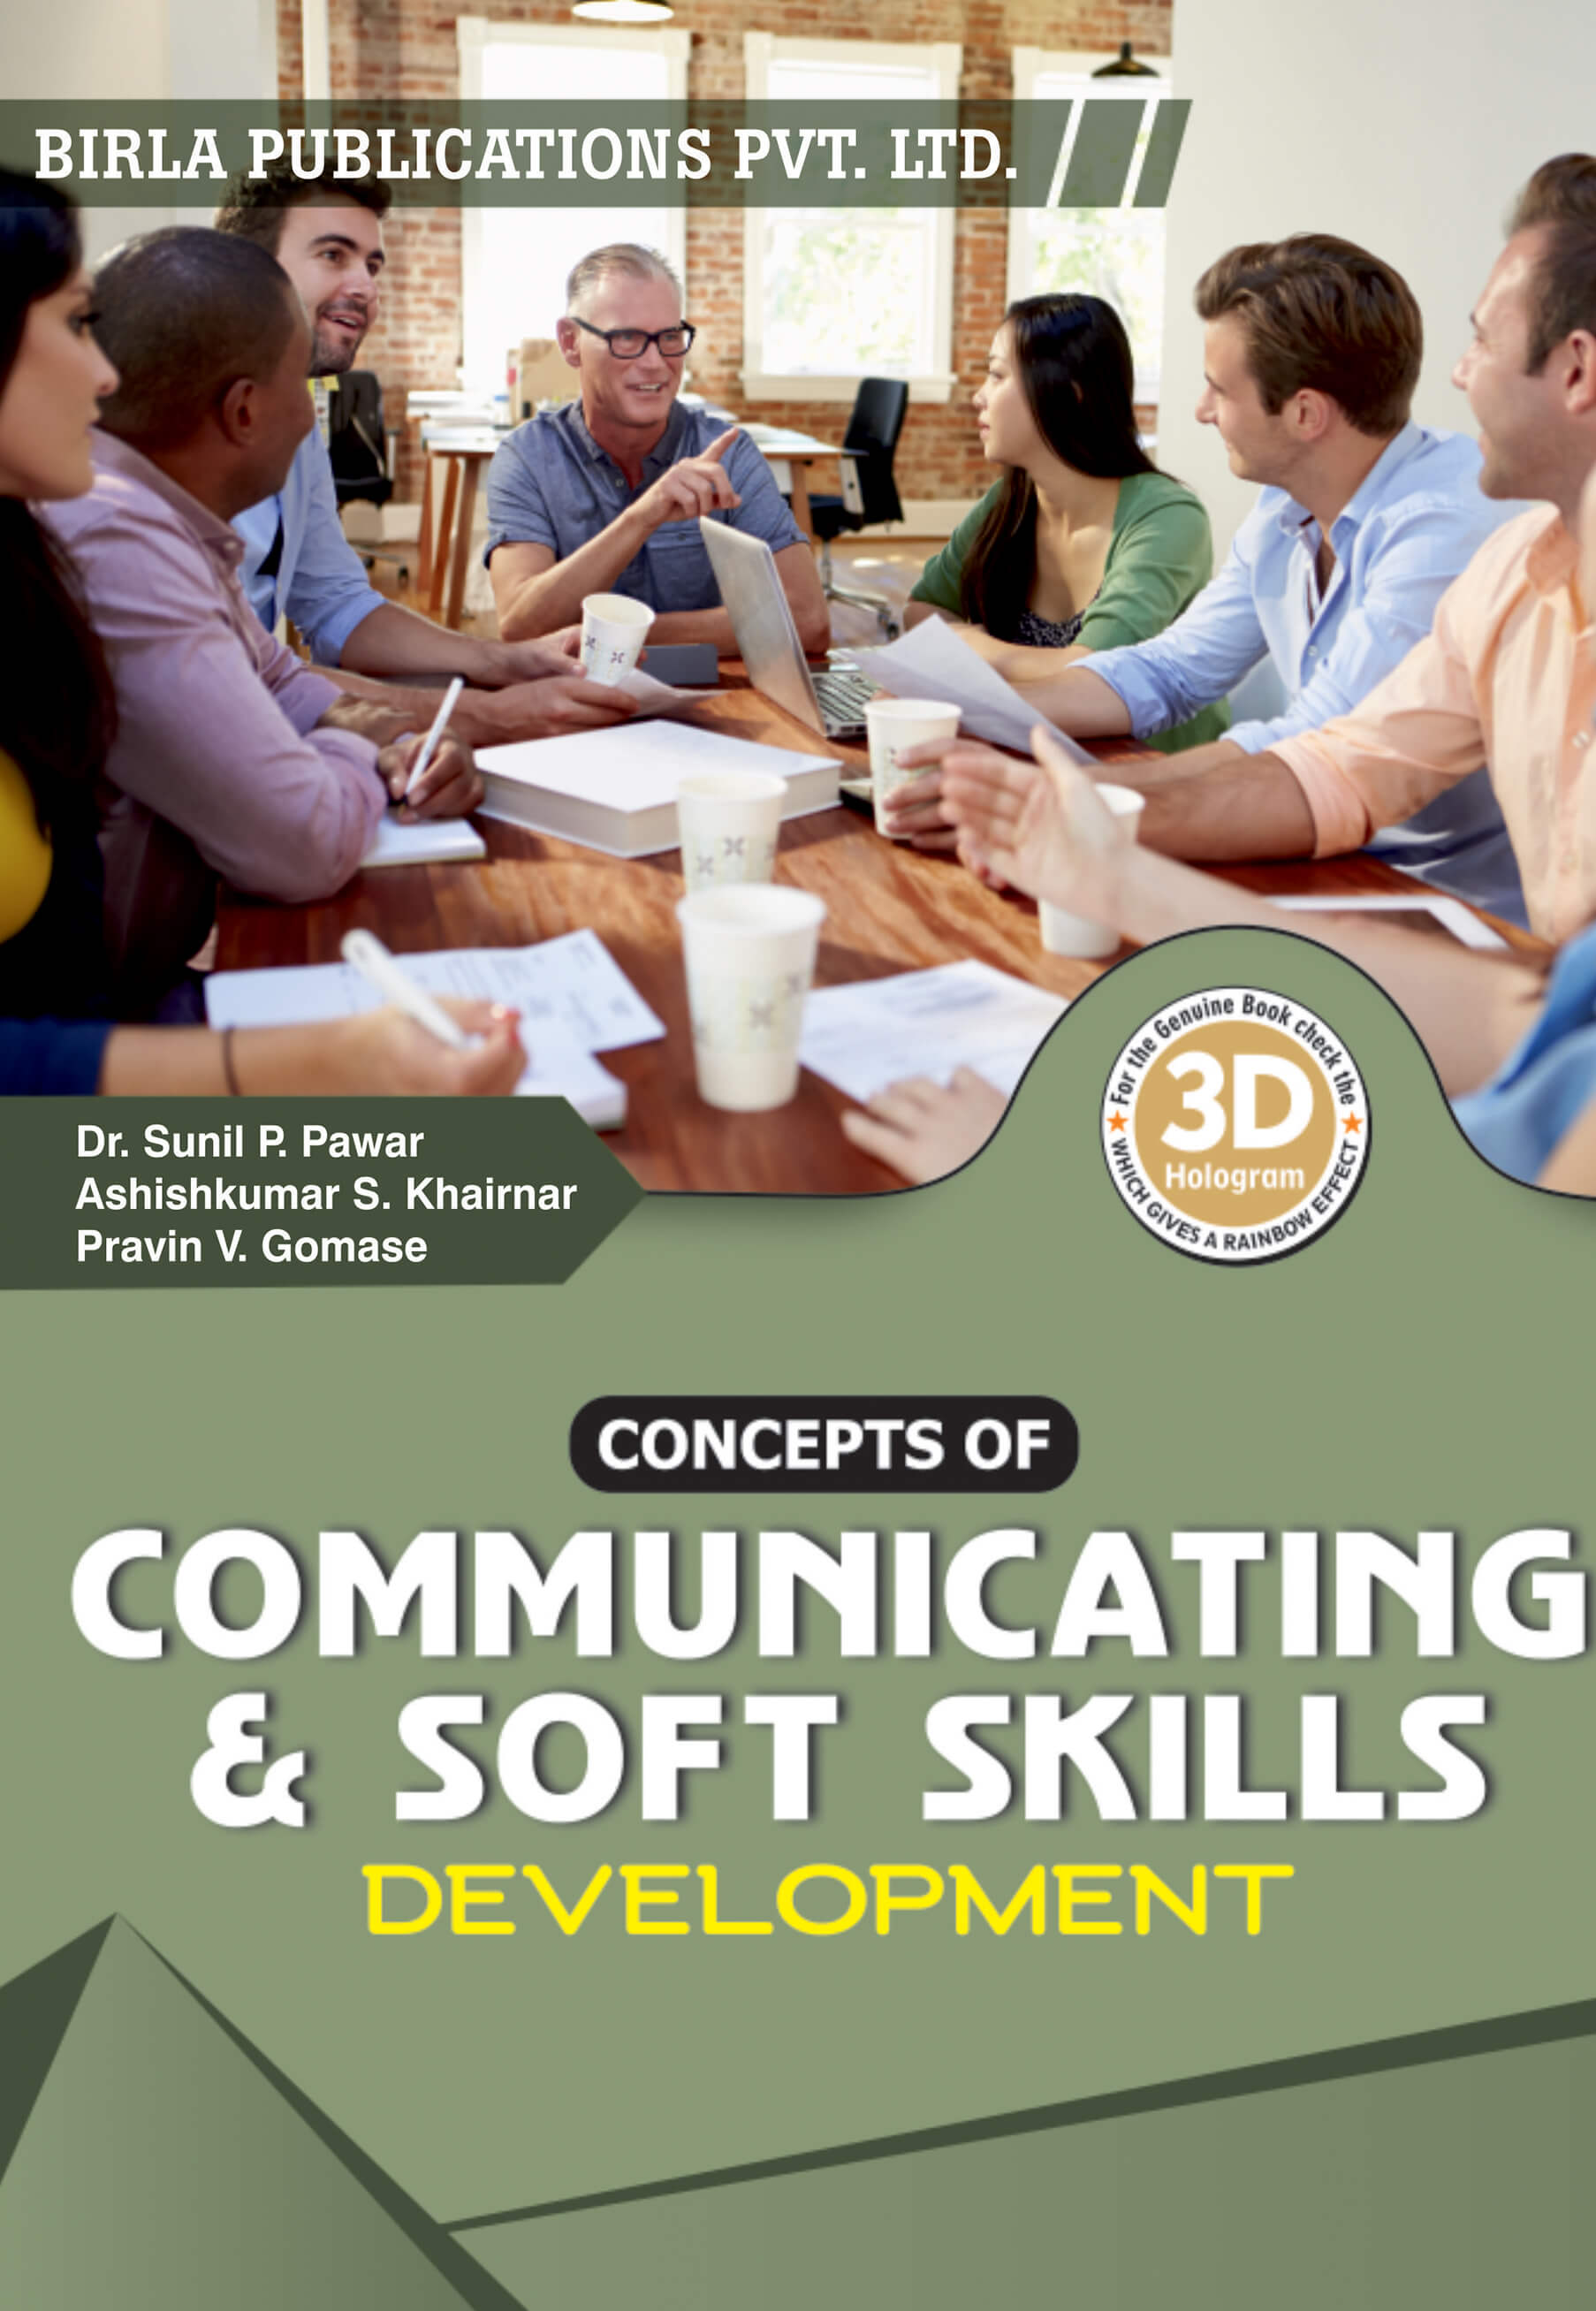 CONCEPTS OF COMMUNICATING & SOFT SKILL DEVELOPMENT